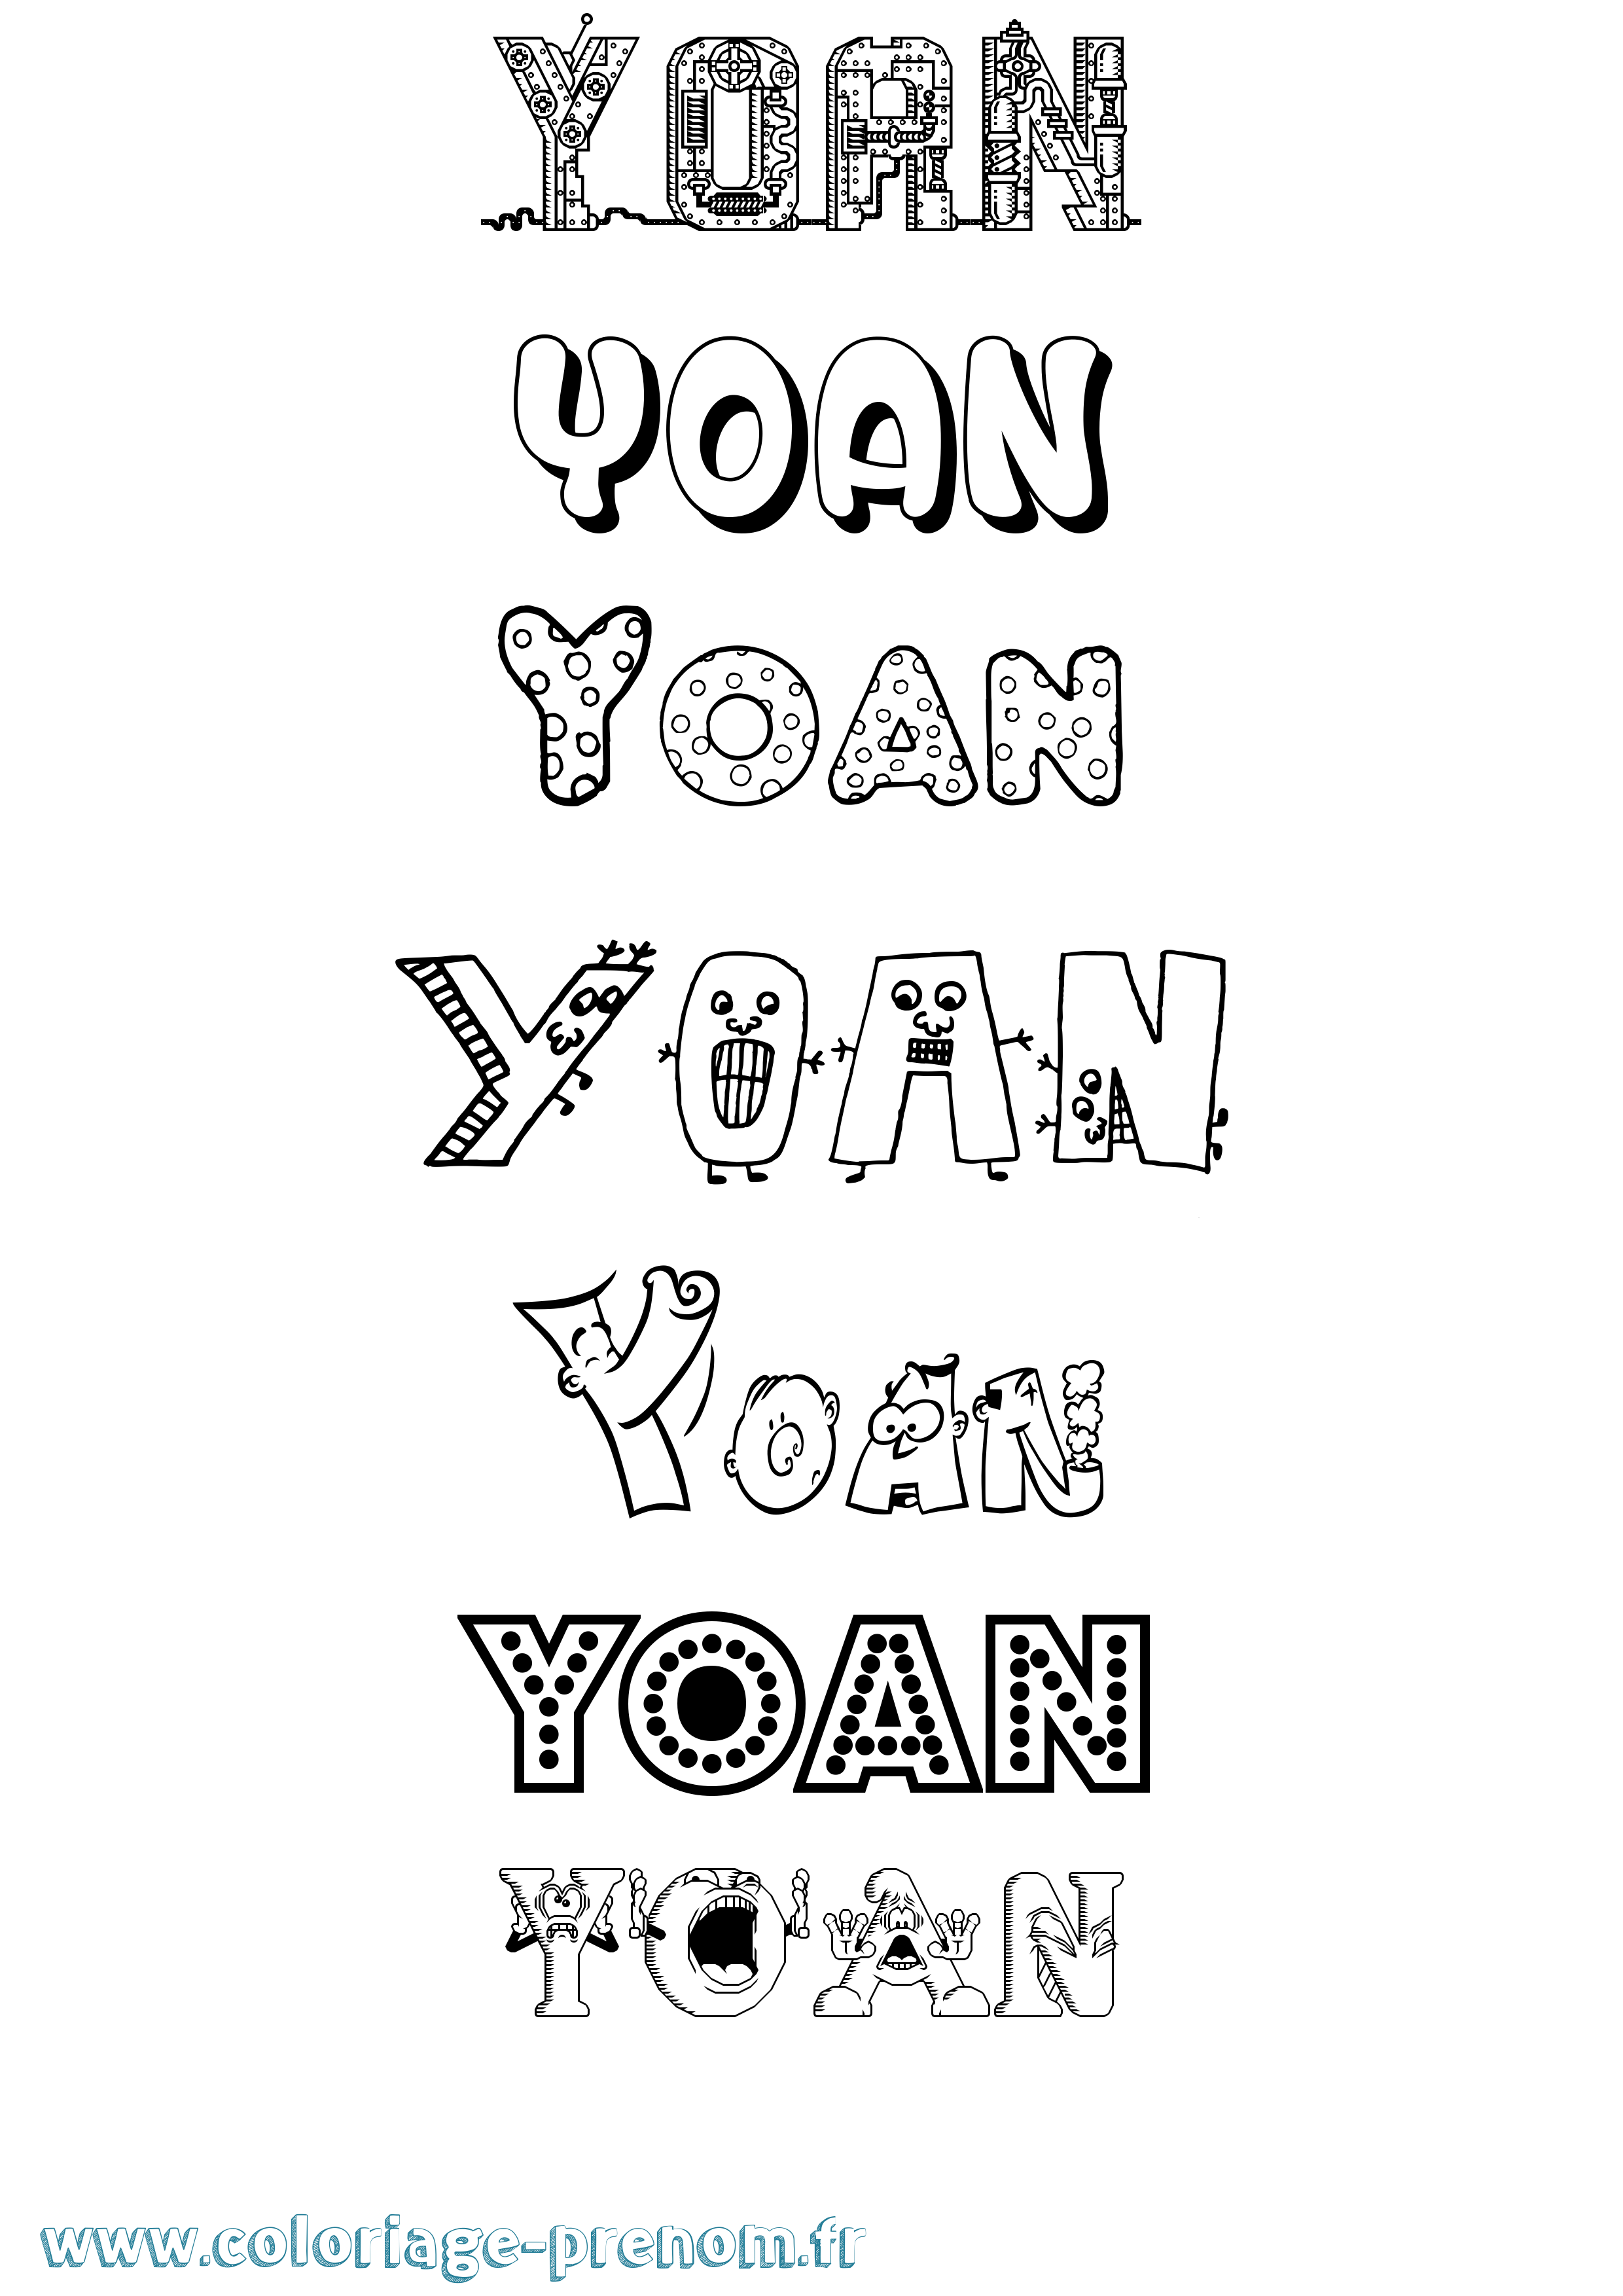 Coloriage prénom Yoan Fun